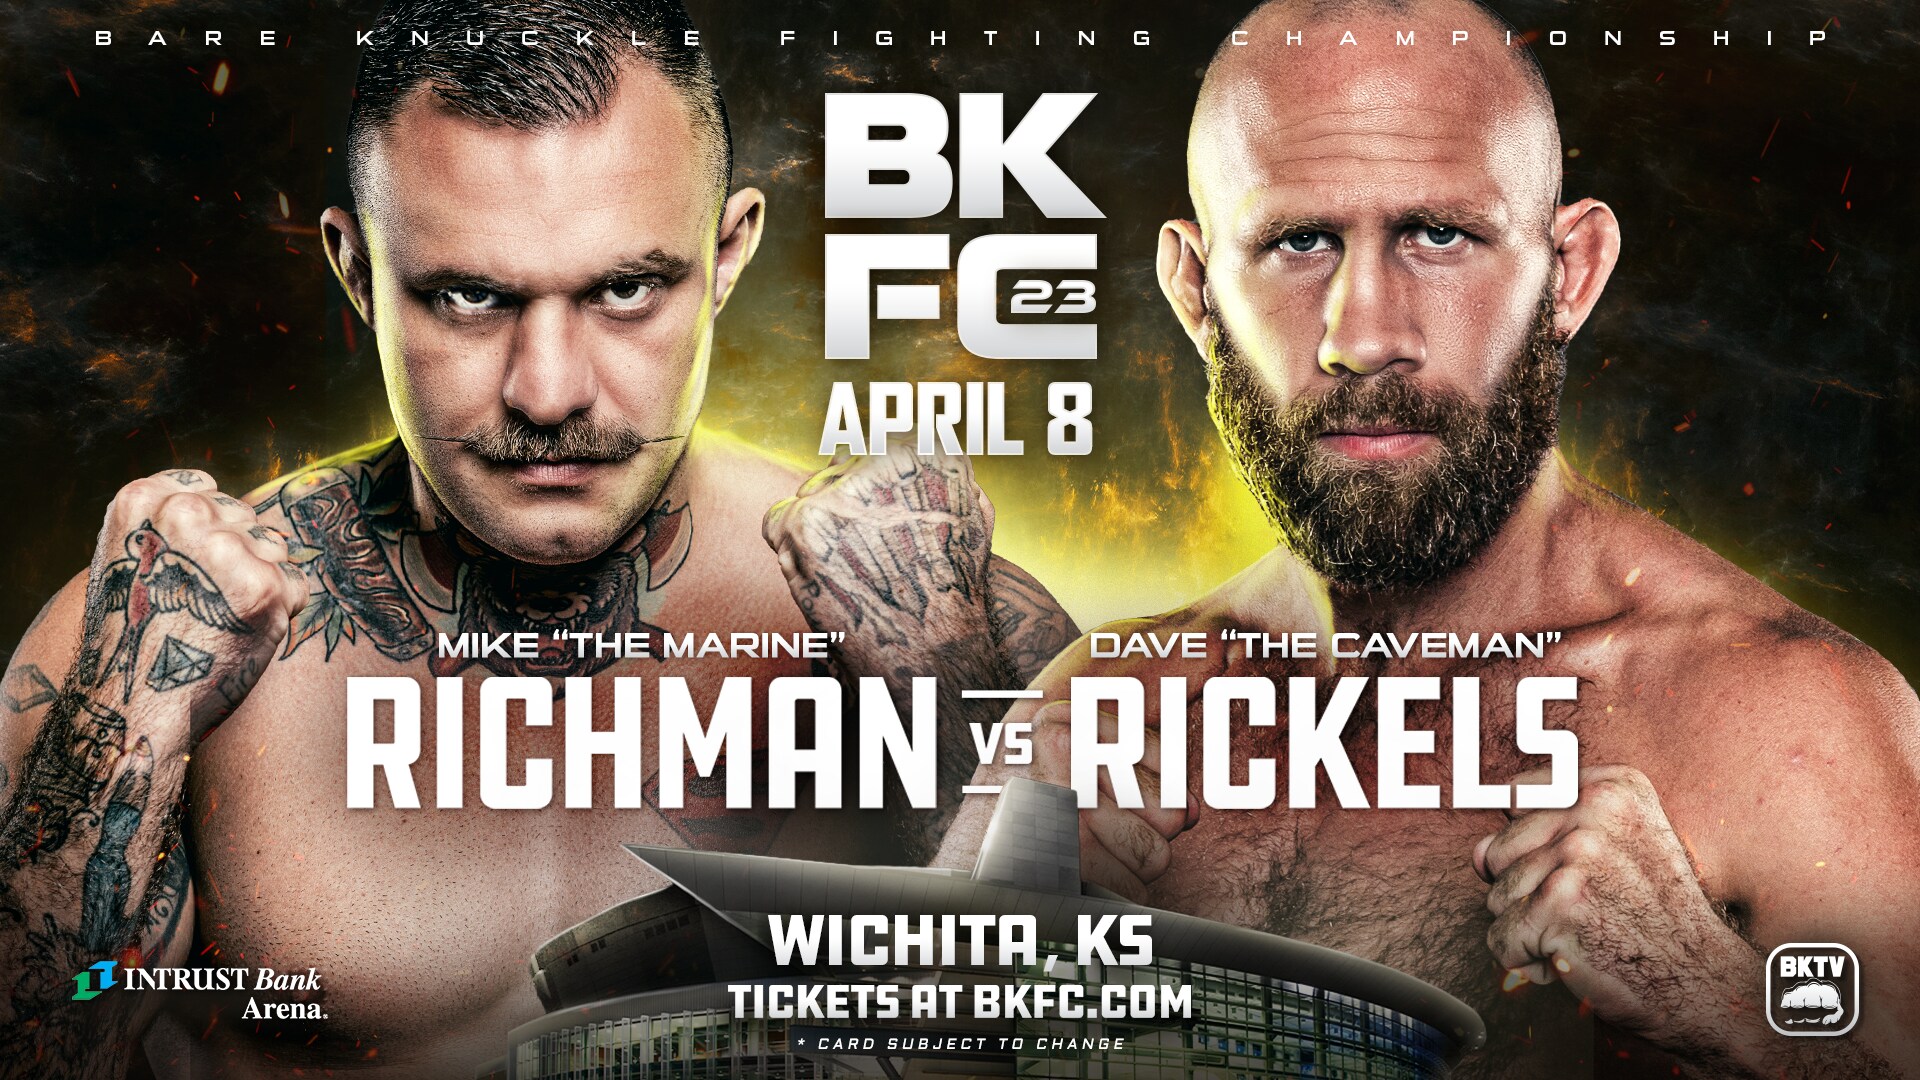 BKFC 23 Richman vs Rickles